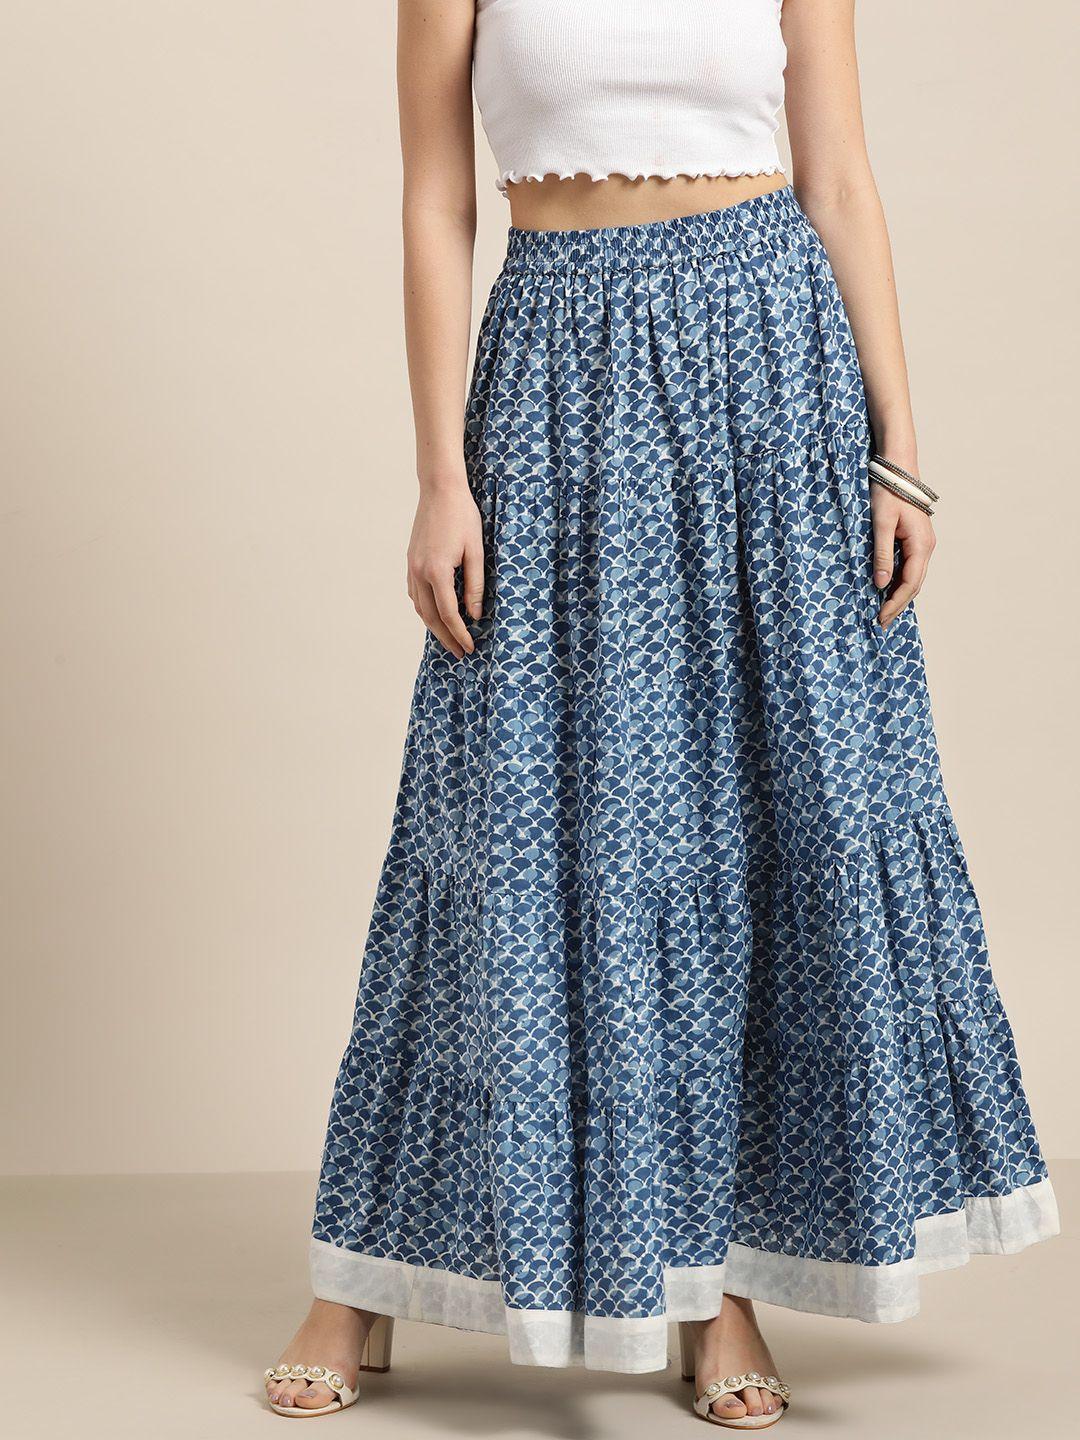 shae-by-sassafras-blue-&-white-maxi-pure-cotton-tiered-skirt